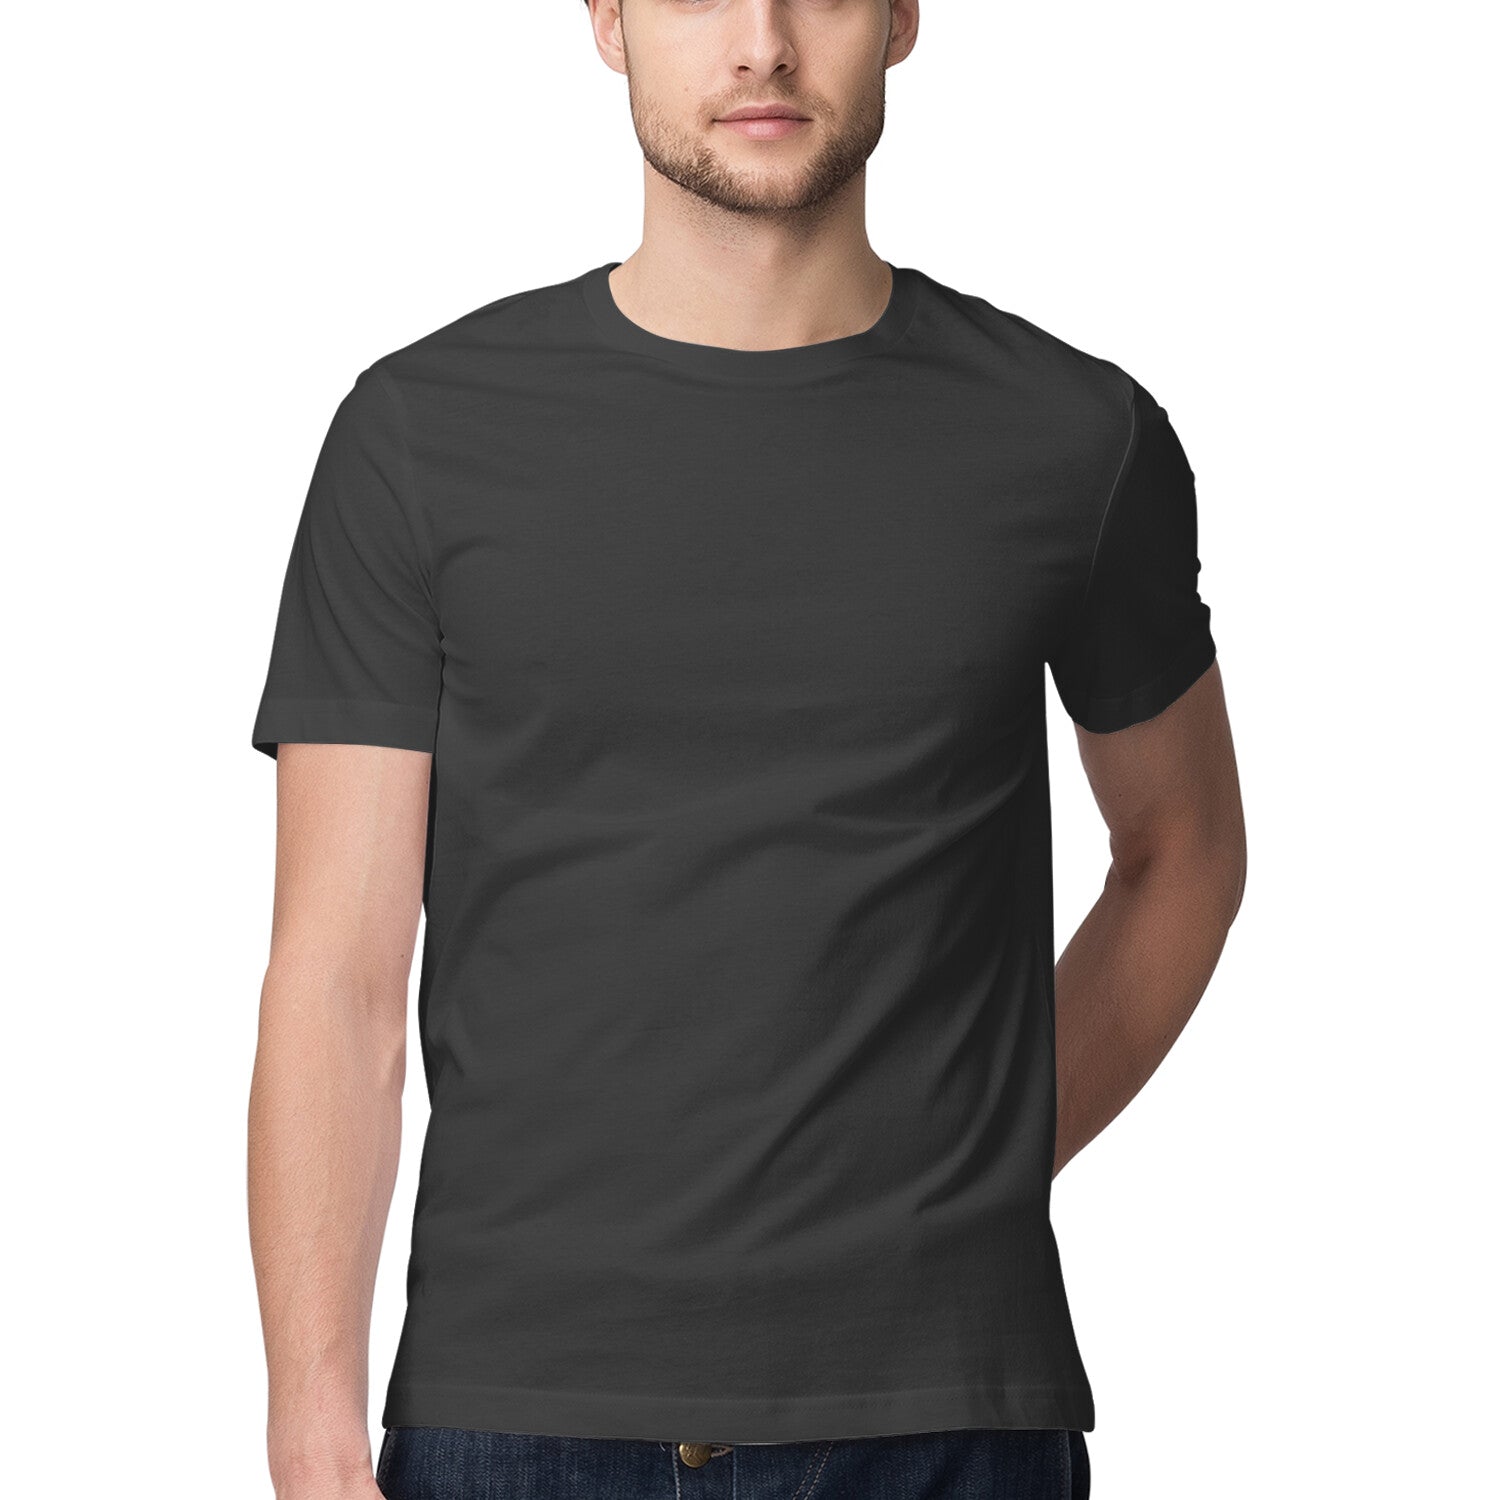 TNH - Men's Round Neck Plain T-Shirt